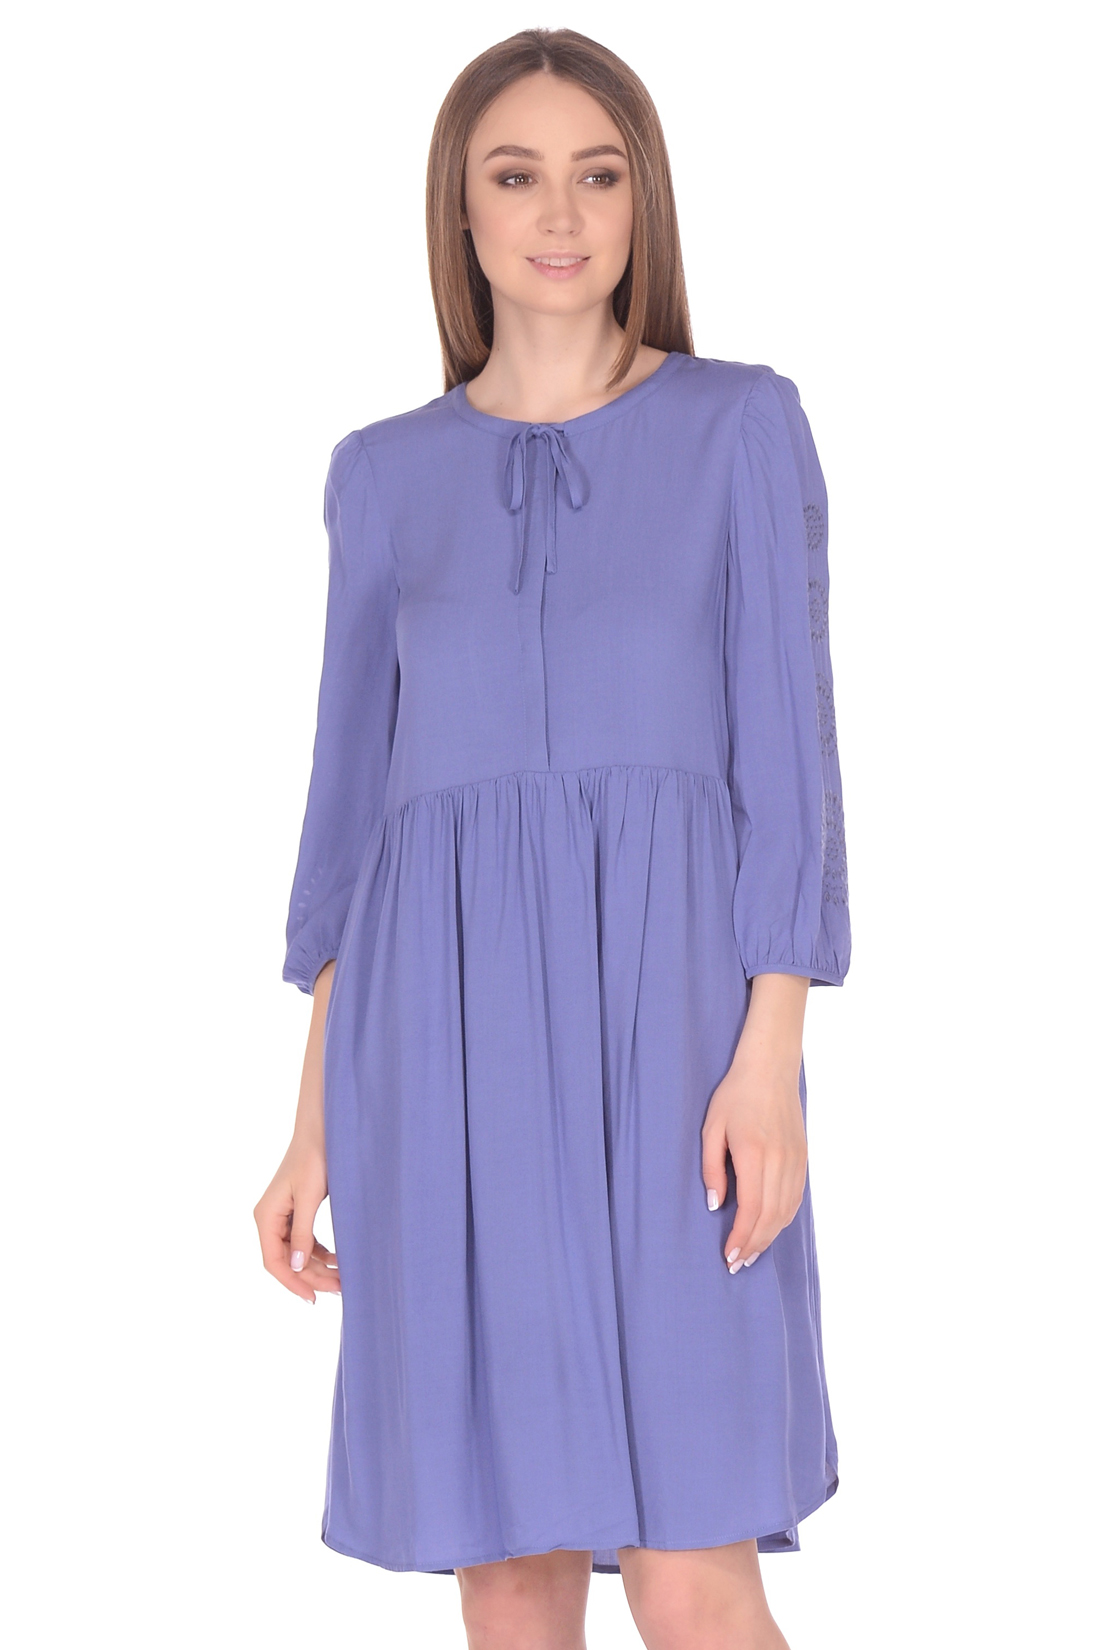 Платье с кружевным узором на рукавах (арт. baon B458096), размер S, цвет синий Платье с кружевным узором на рукавах (арт. baon B458096) - фото 3